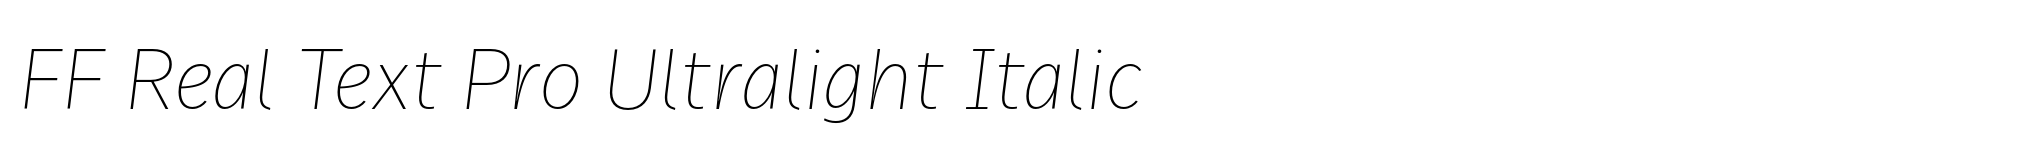 FF Real Text Pro Ultralight Italic image